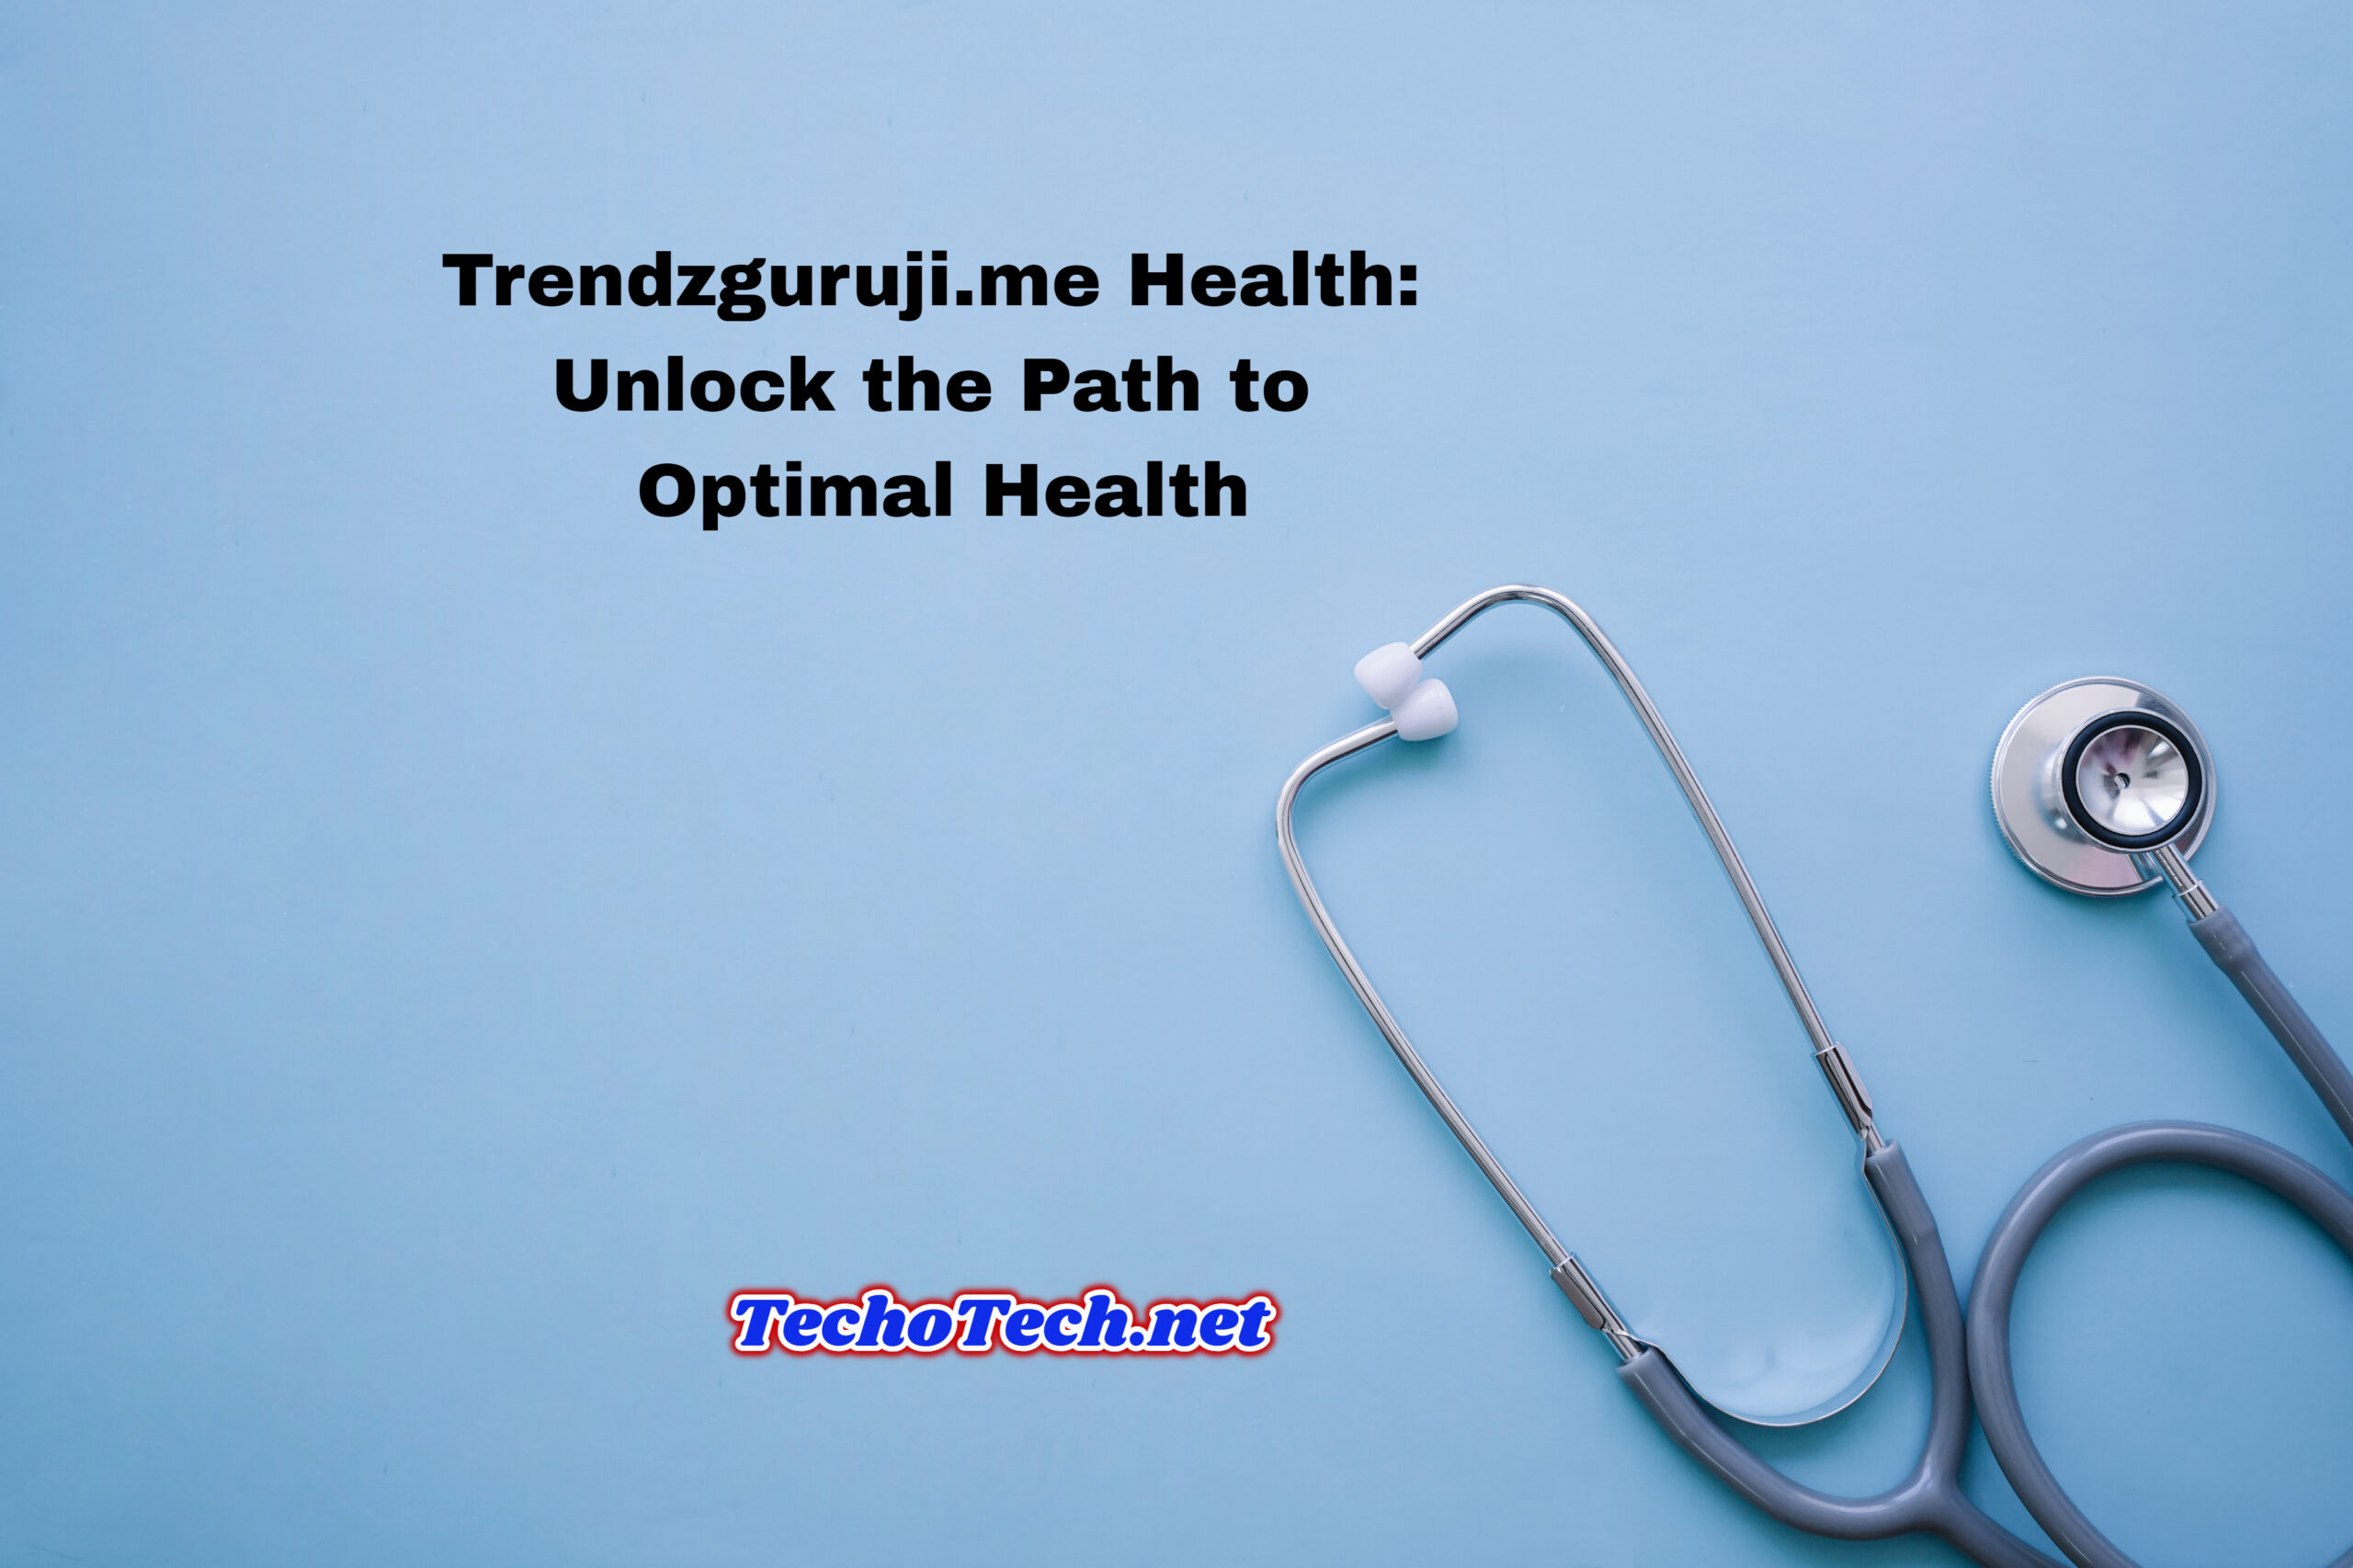 Trendzguruji.me Health: Unlock the Path to Optimal Health